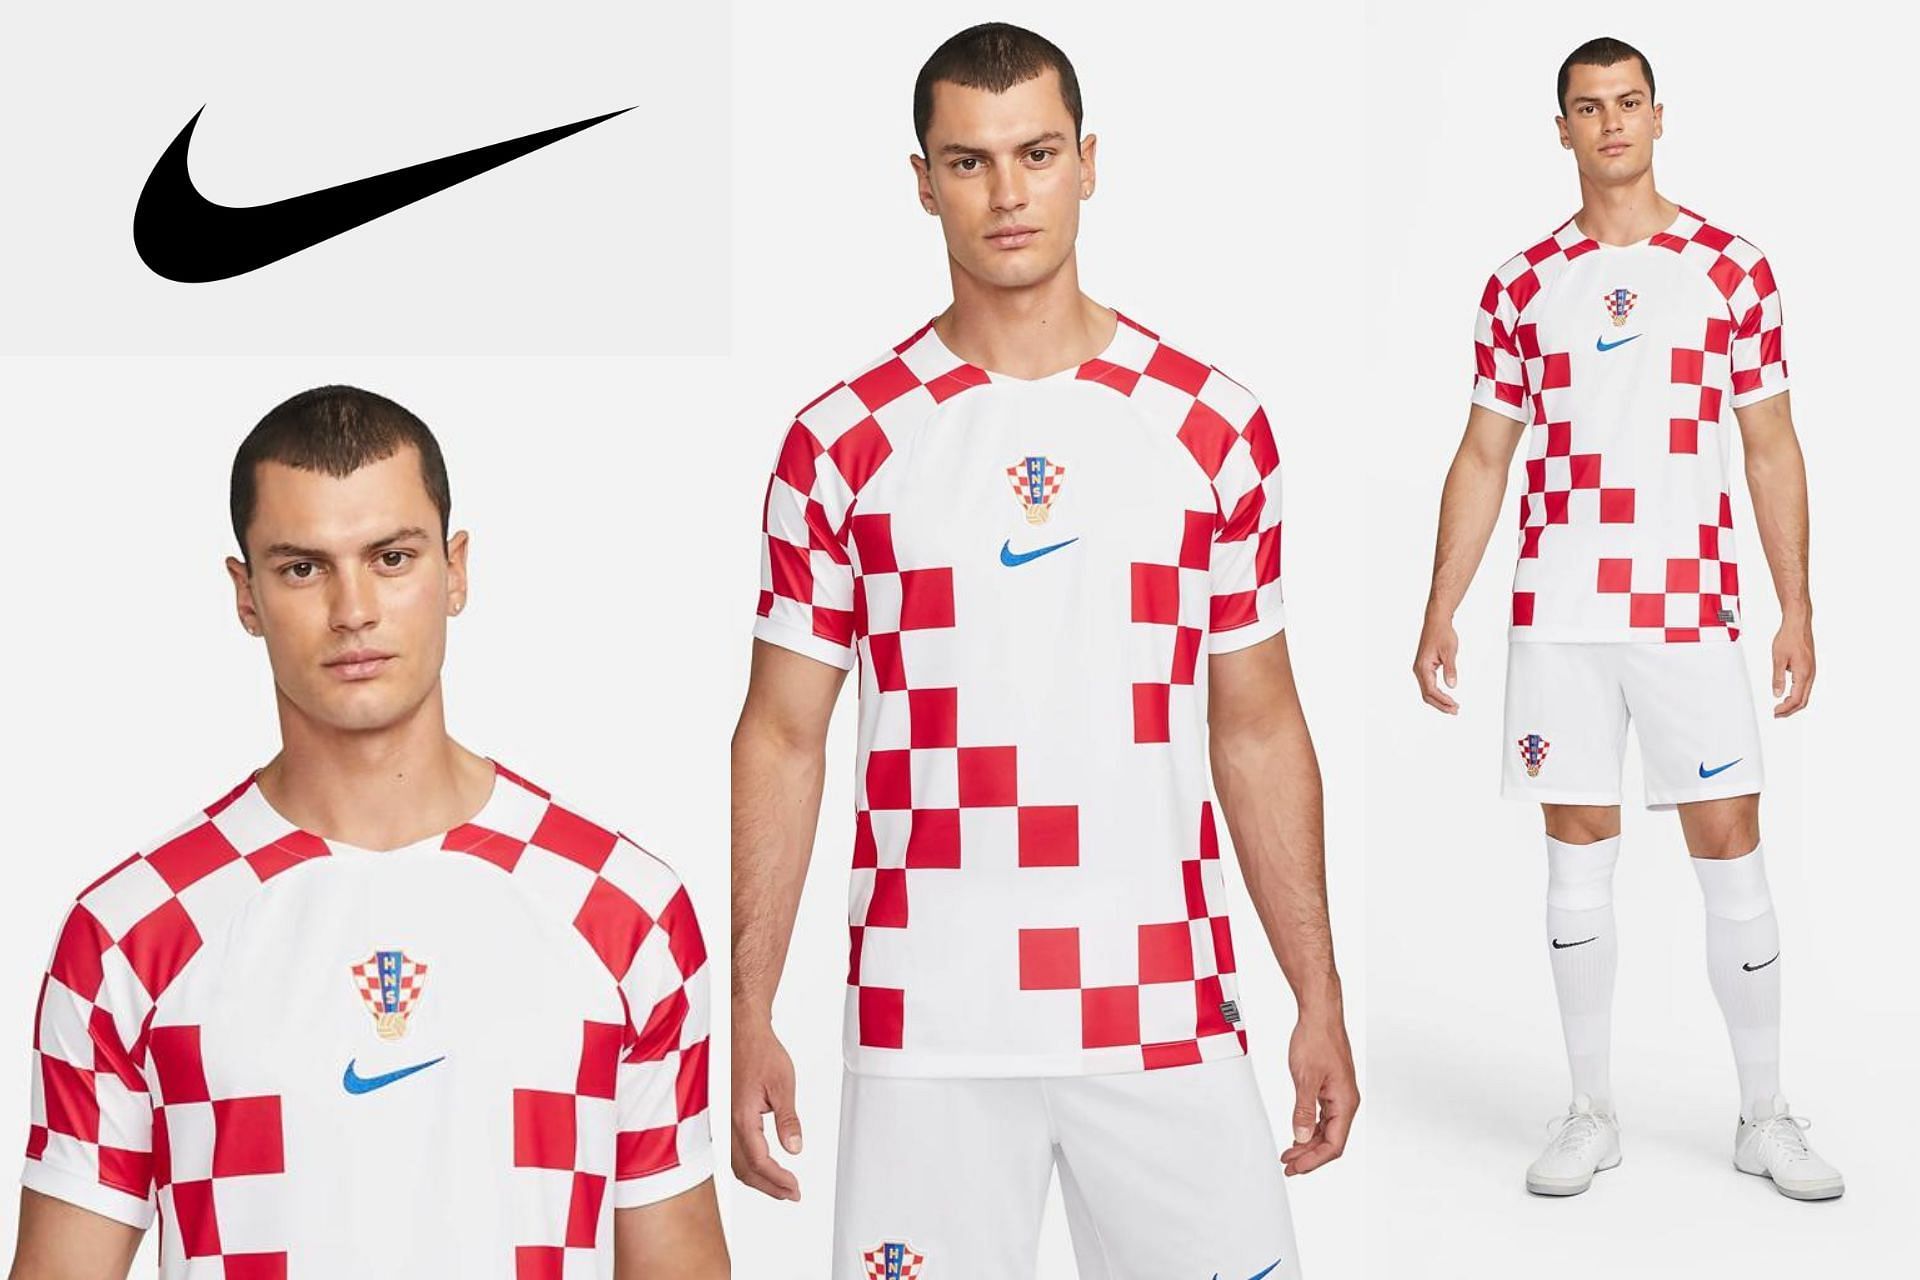 Croatian football culture's shirts